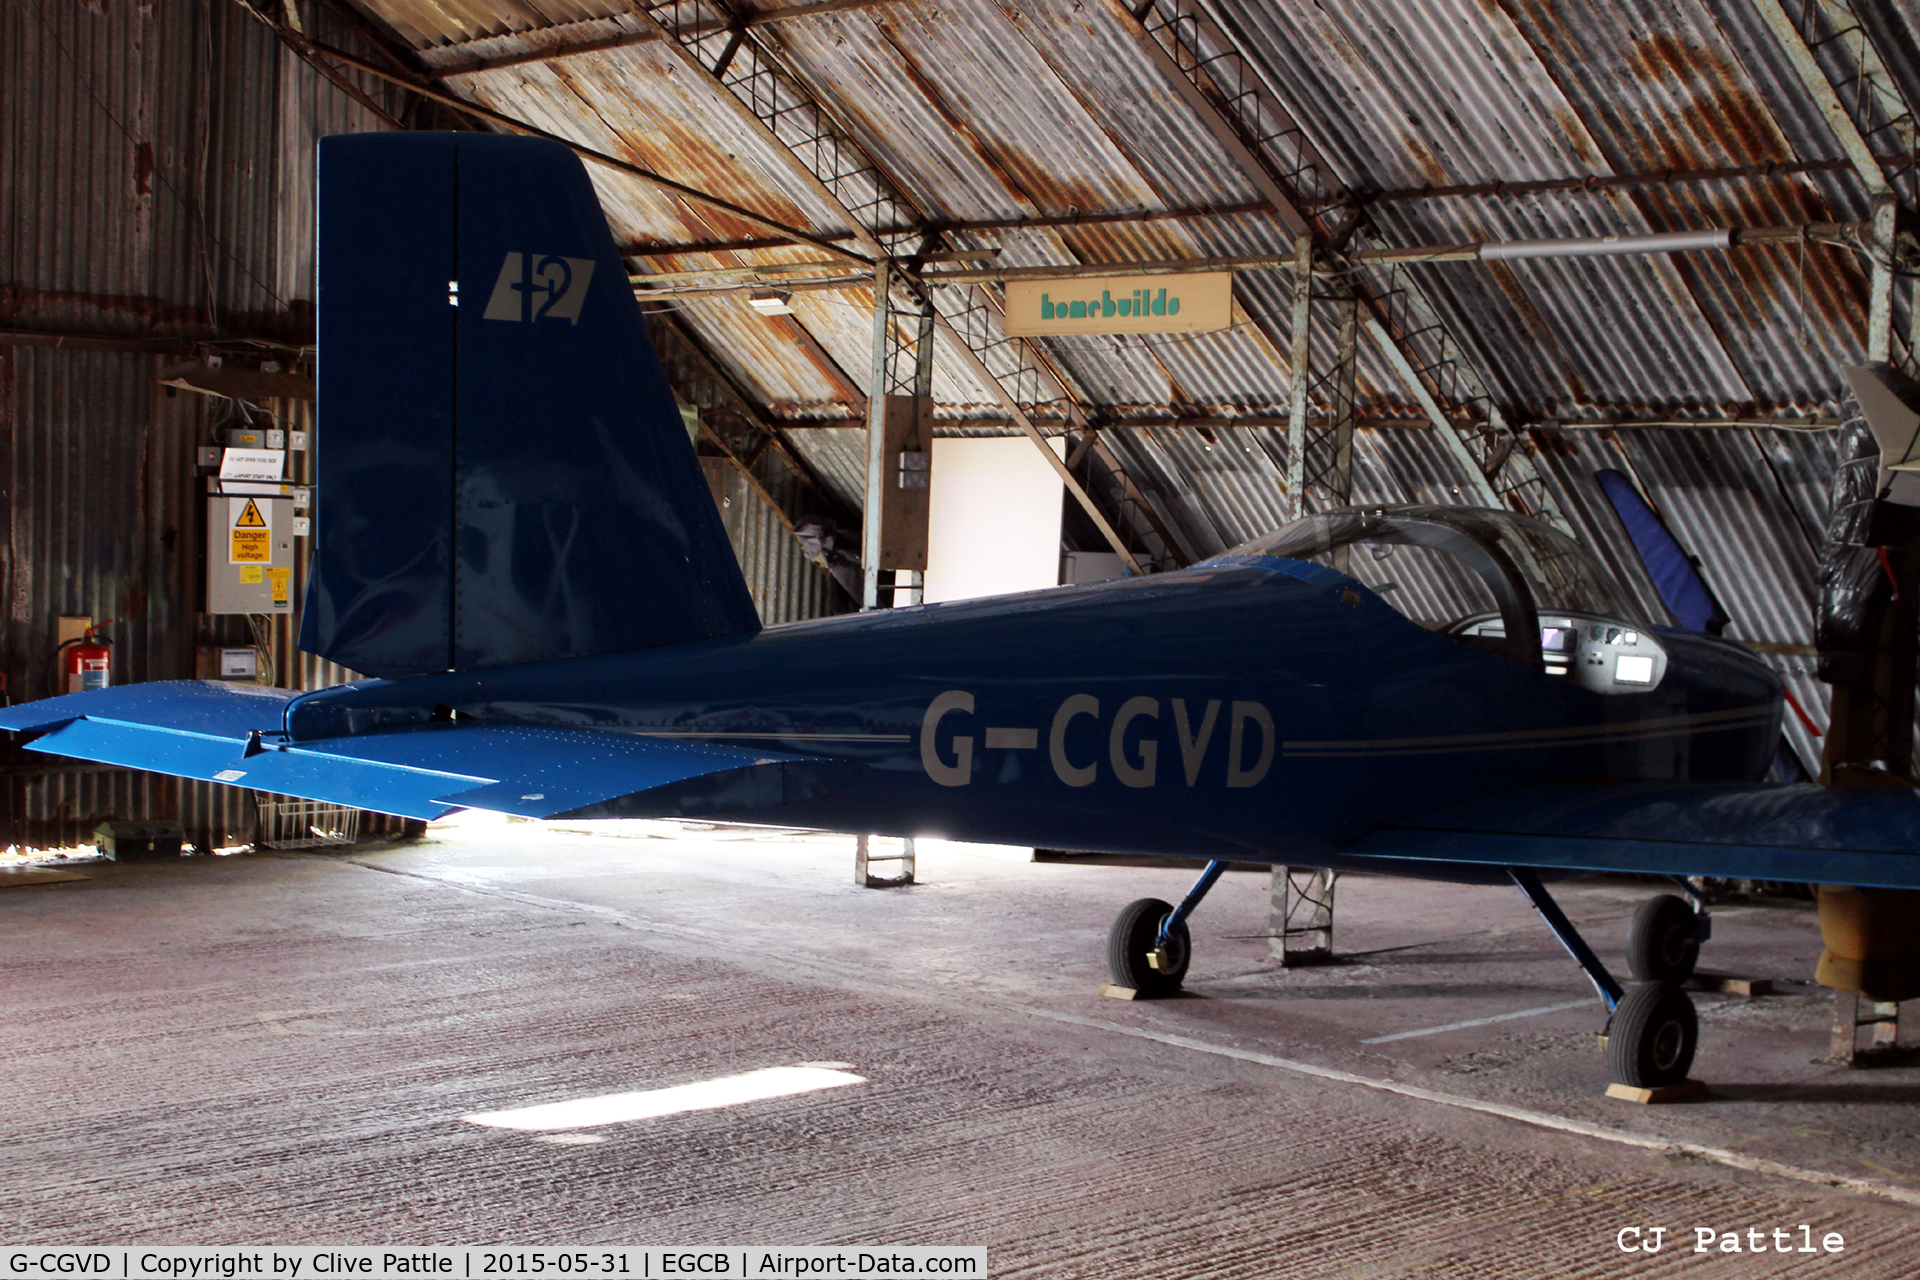 G-CGVD, 2011 Vans RV-12 C/N LAA 363-15005, Tucked away in a hangar at Barton airfield, Manchester - EGCB